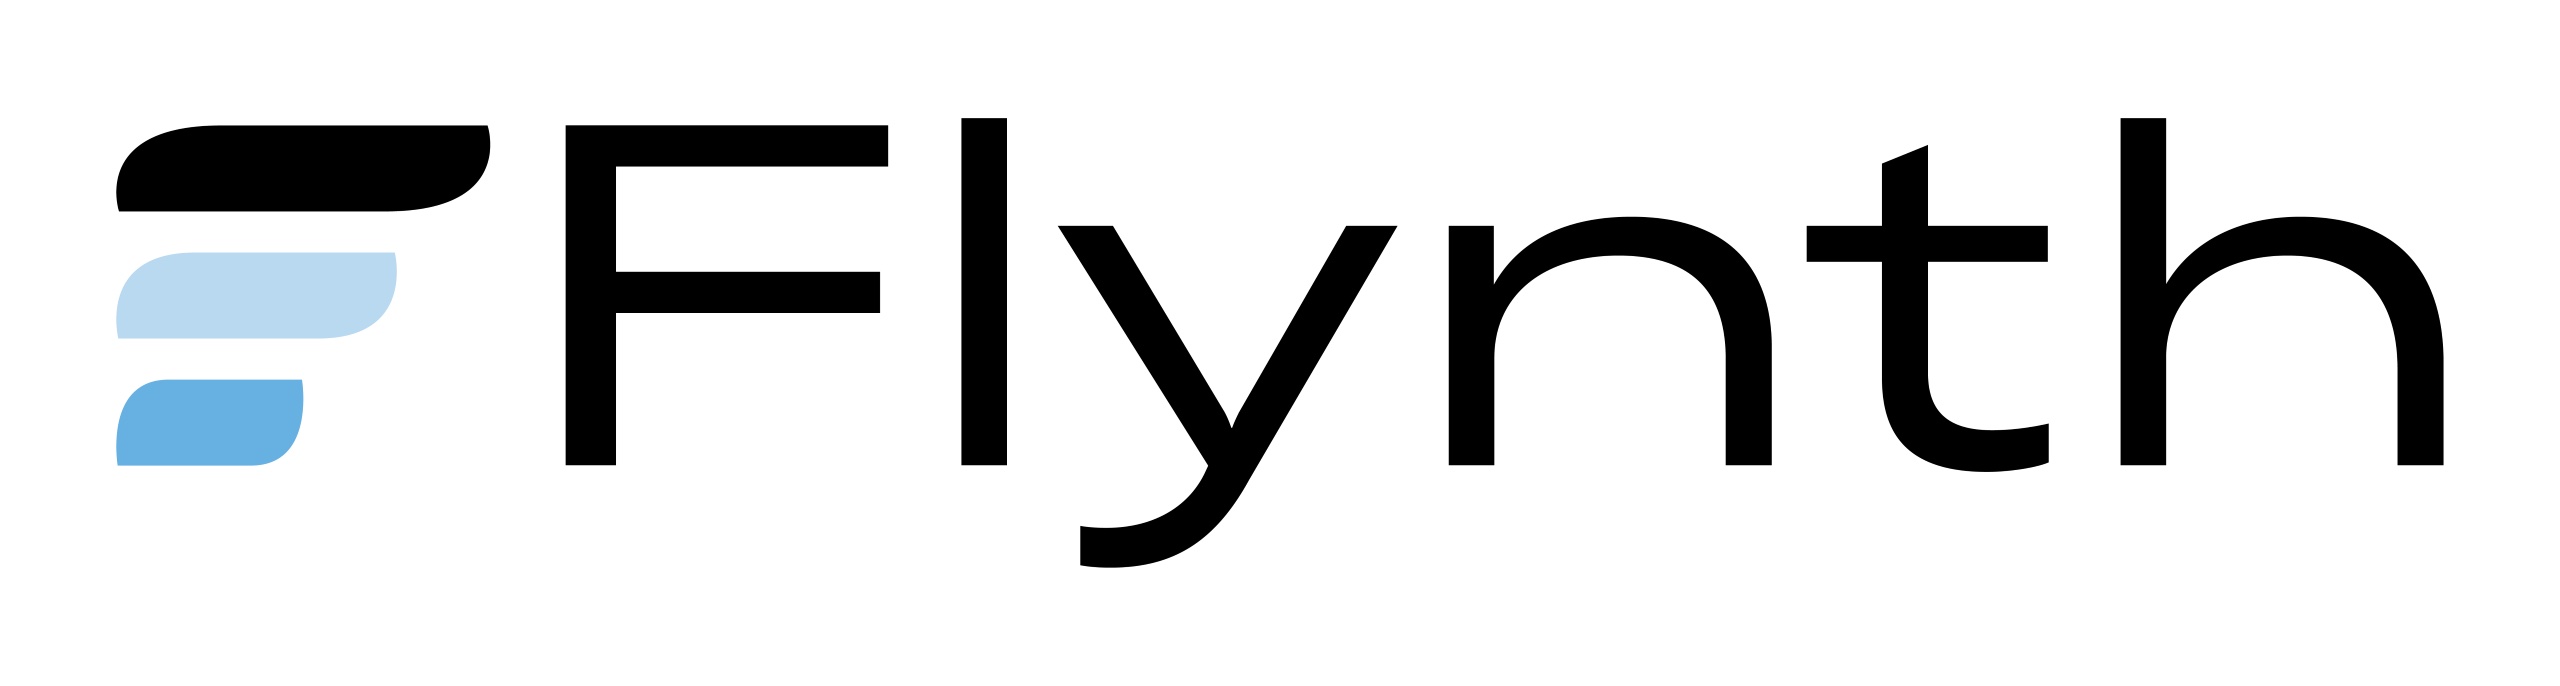 Flynth logo[57]